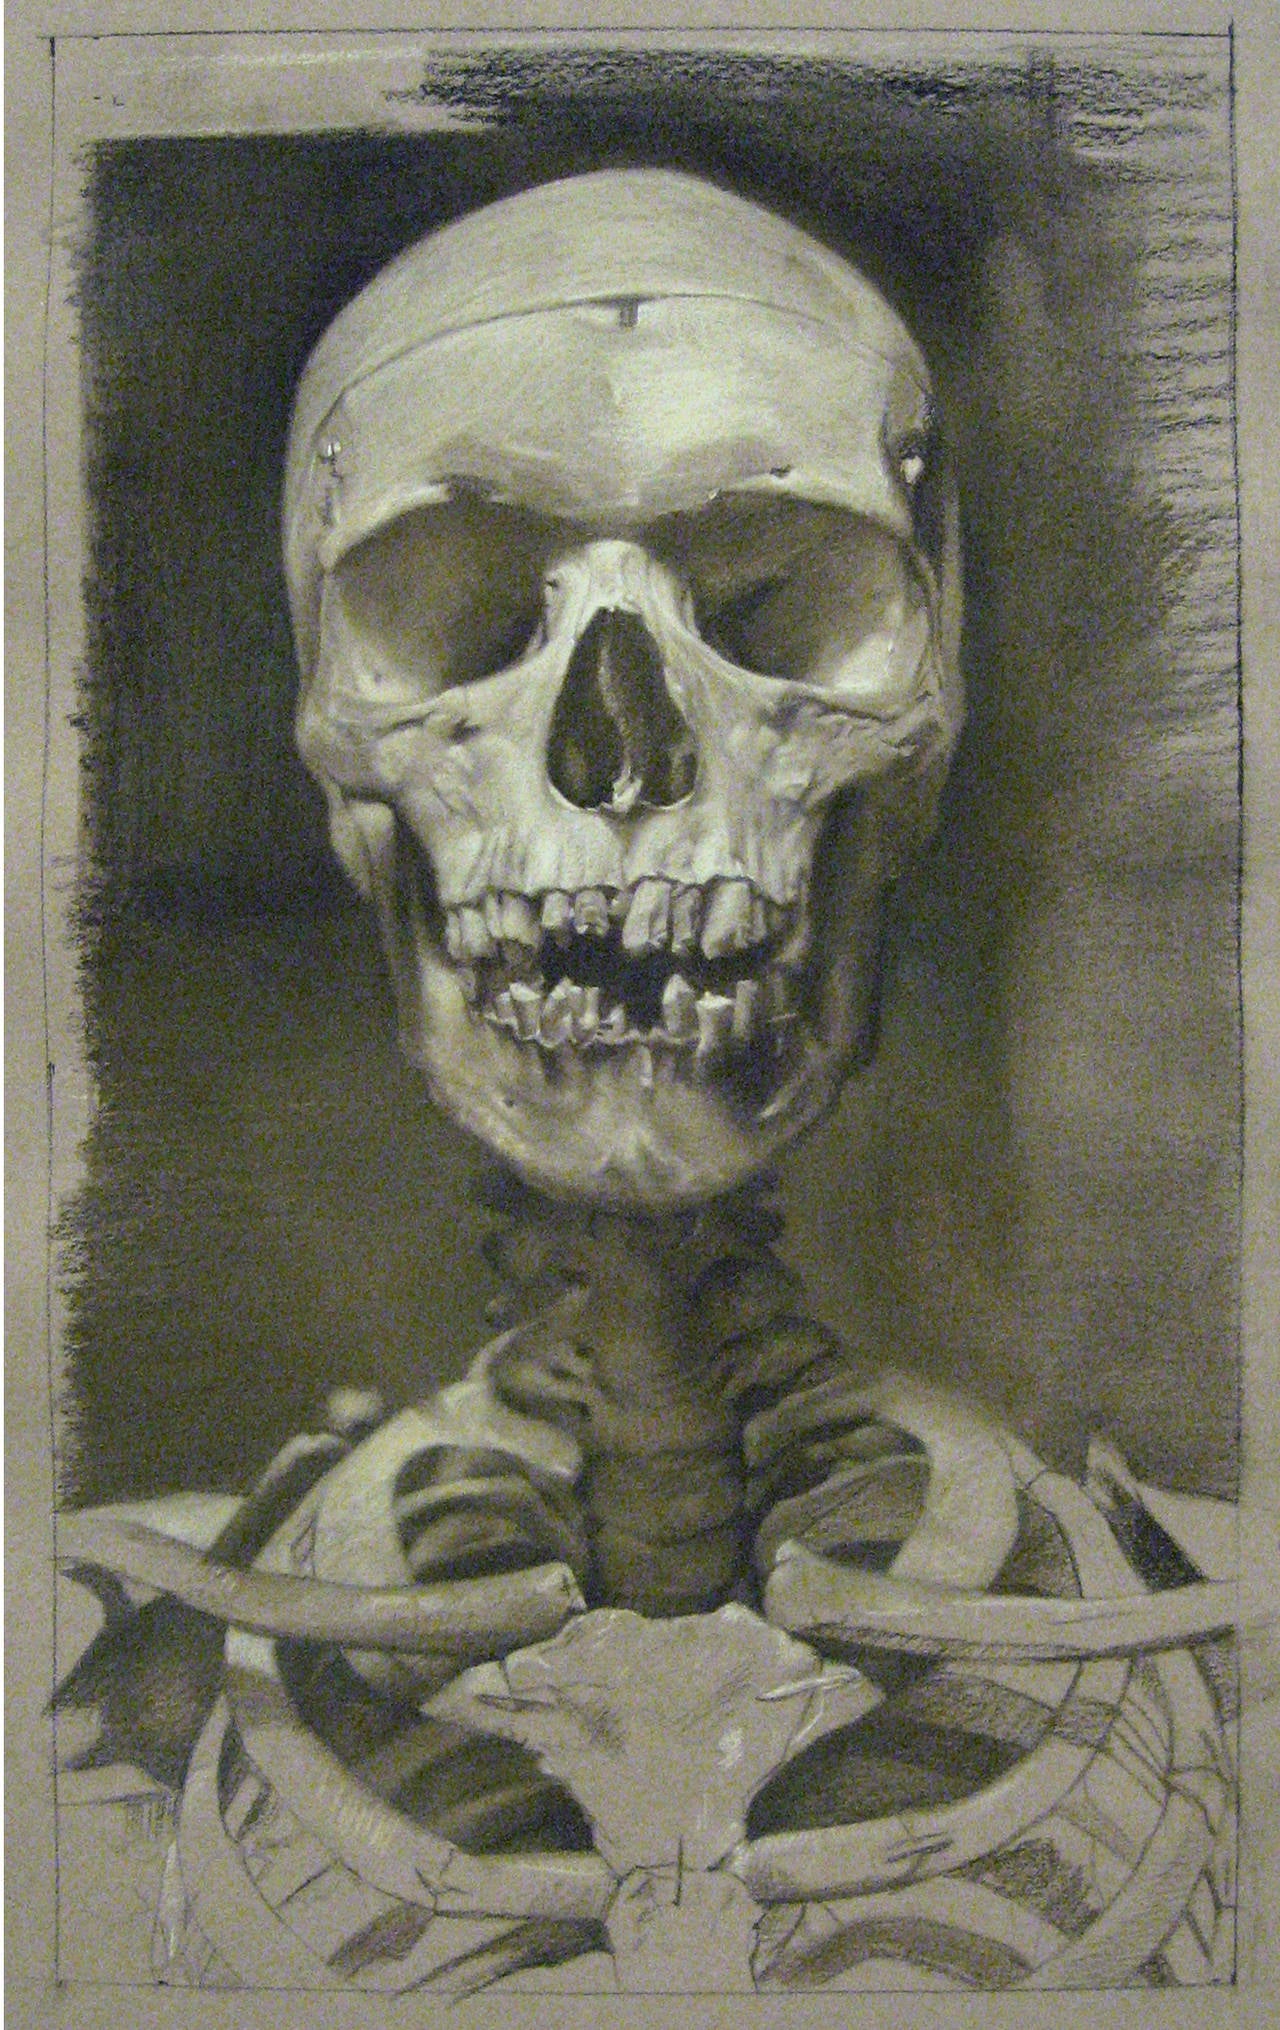 ANATOMY STUDY IN SEPIA, portrait of human skeleton, bones, damaged teeth - Art by David Kassan